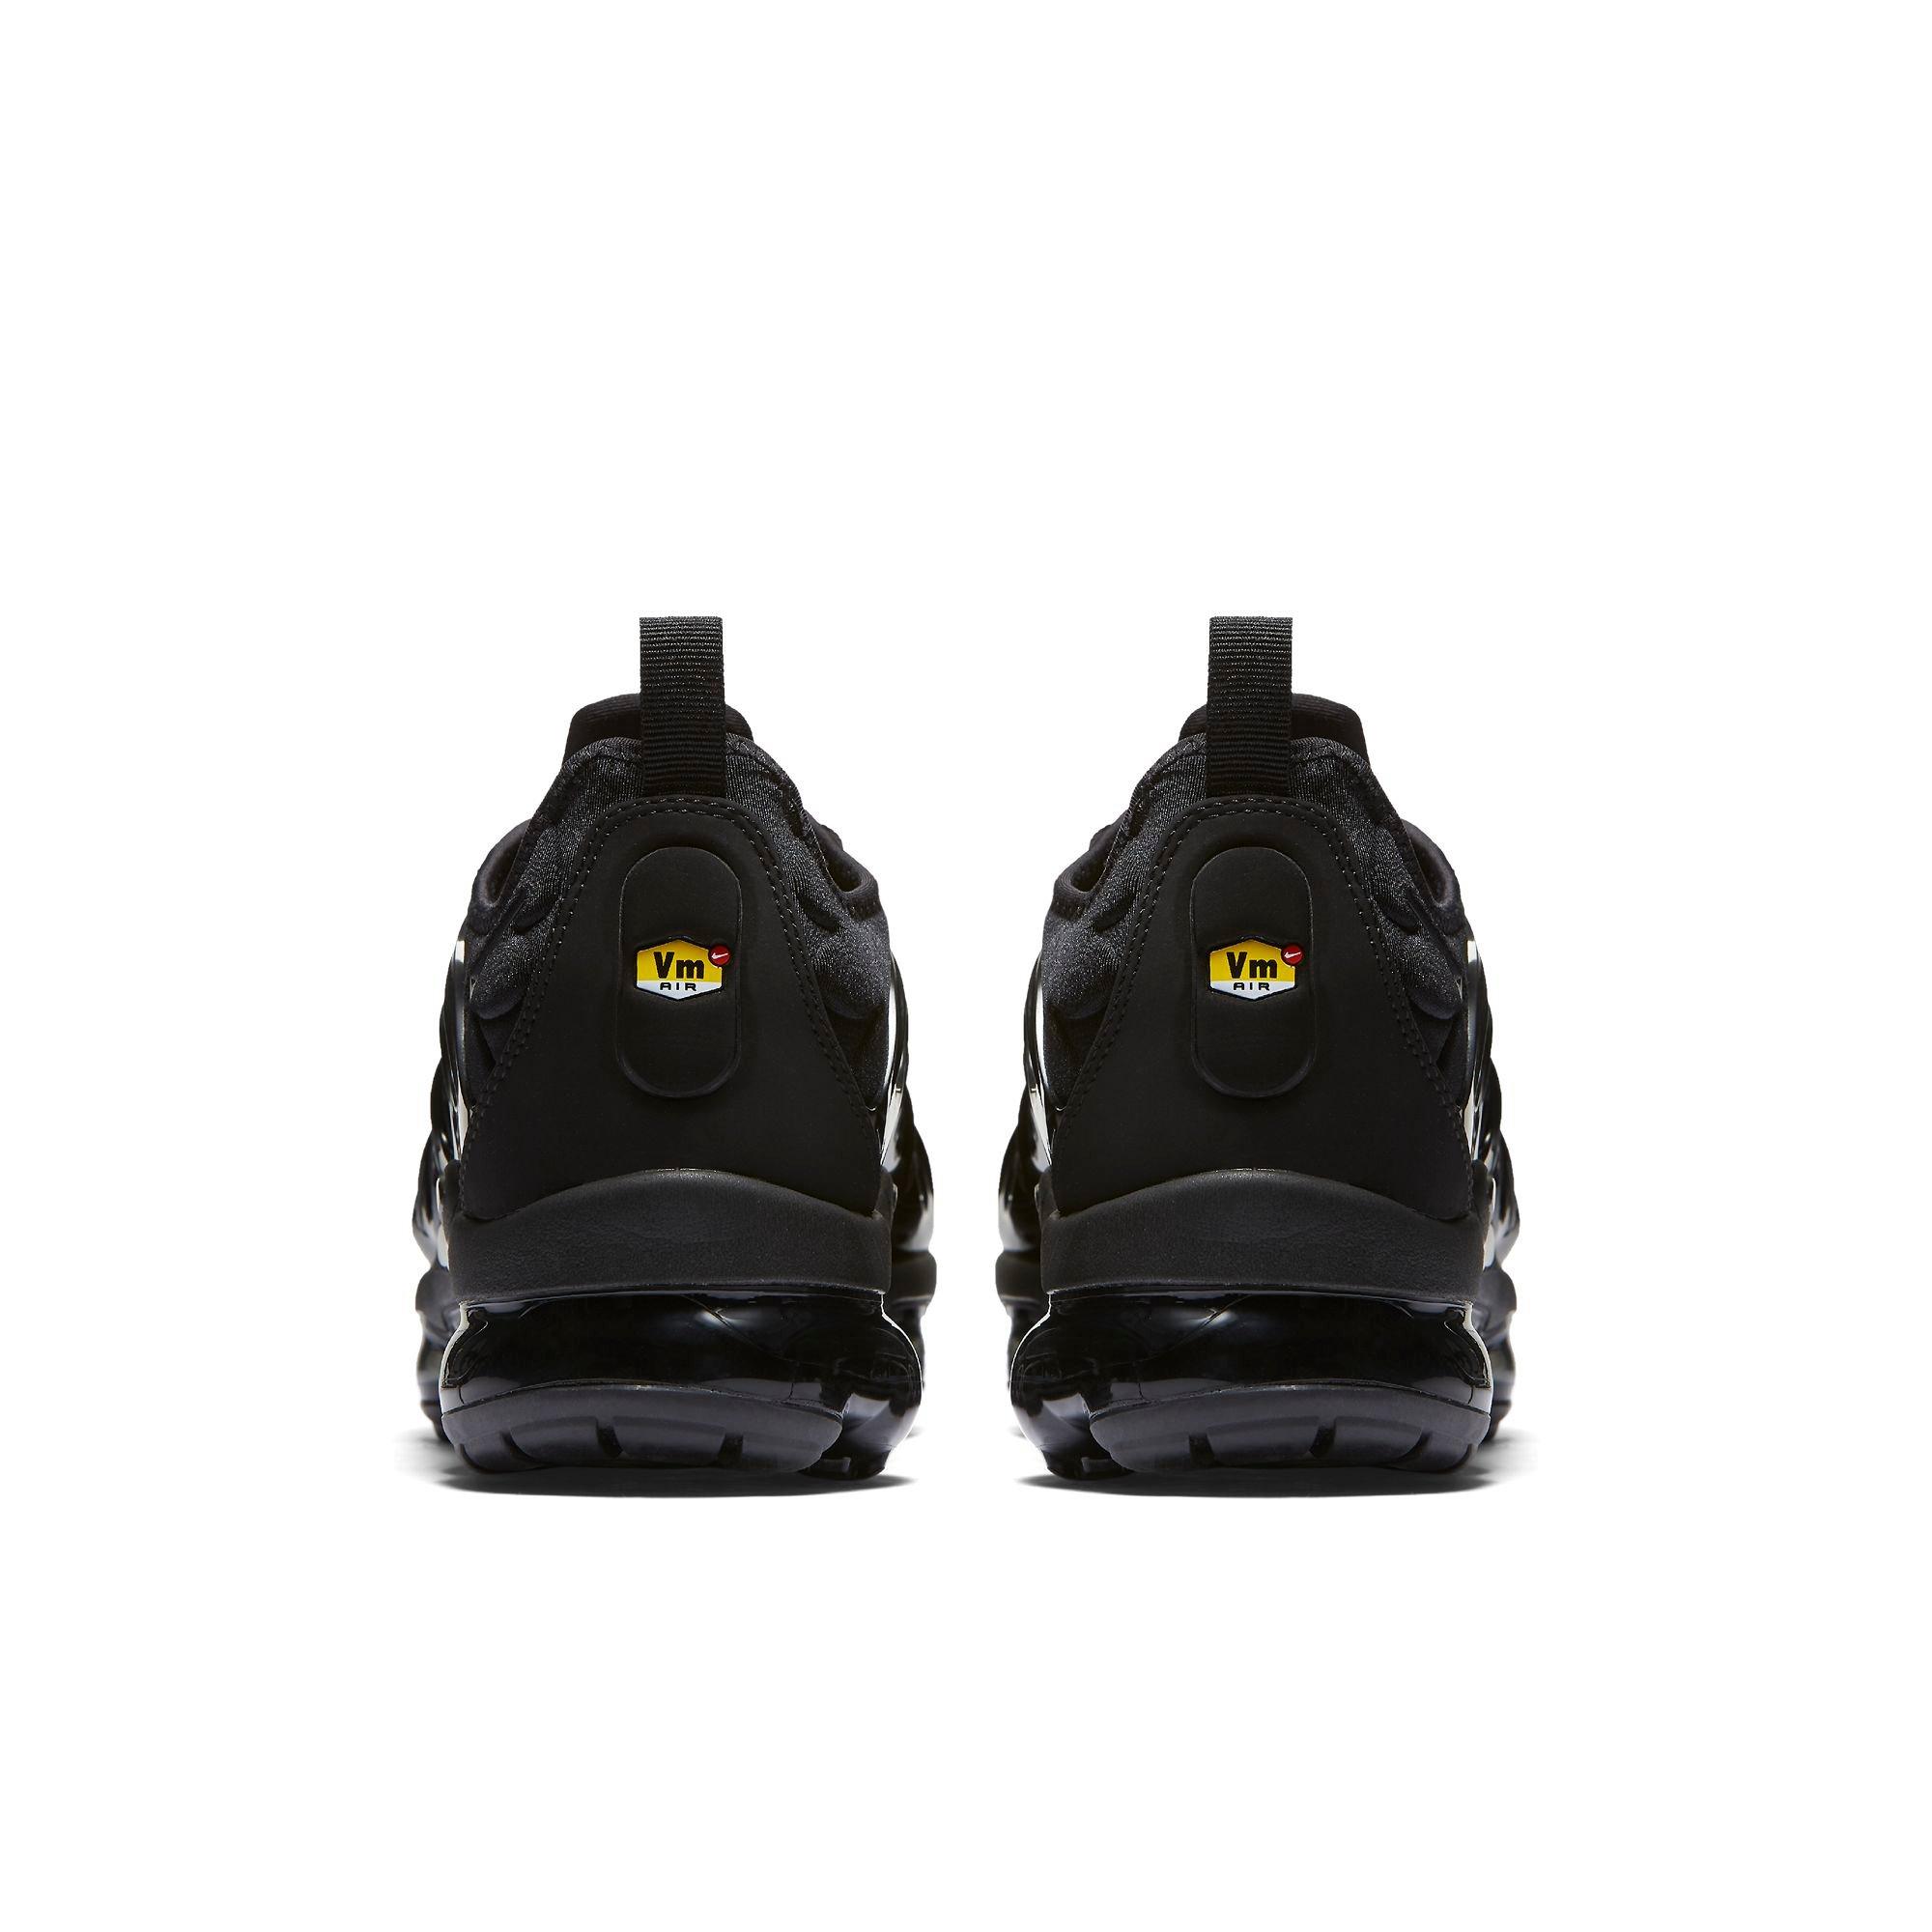 Kent Geología fusión Nike Air VaporMax Plus "Black" Men's Shoe